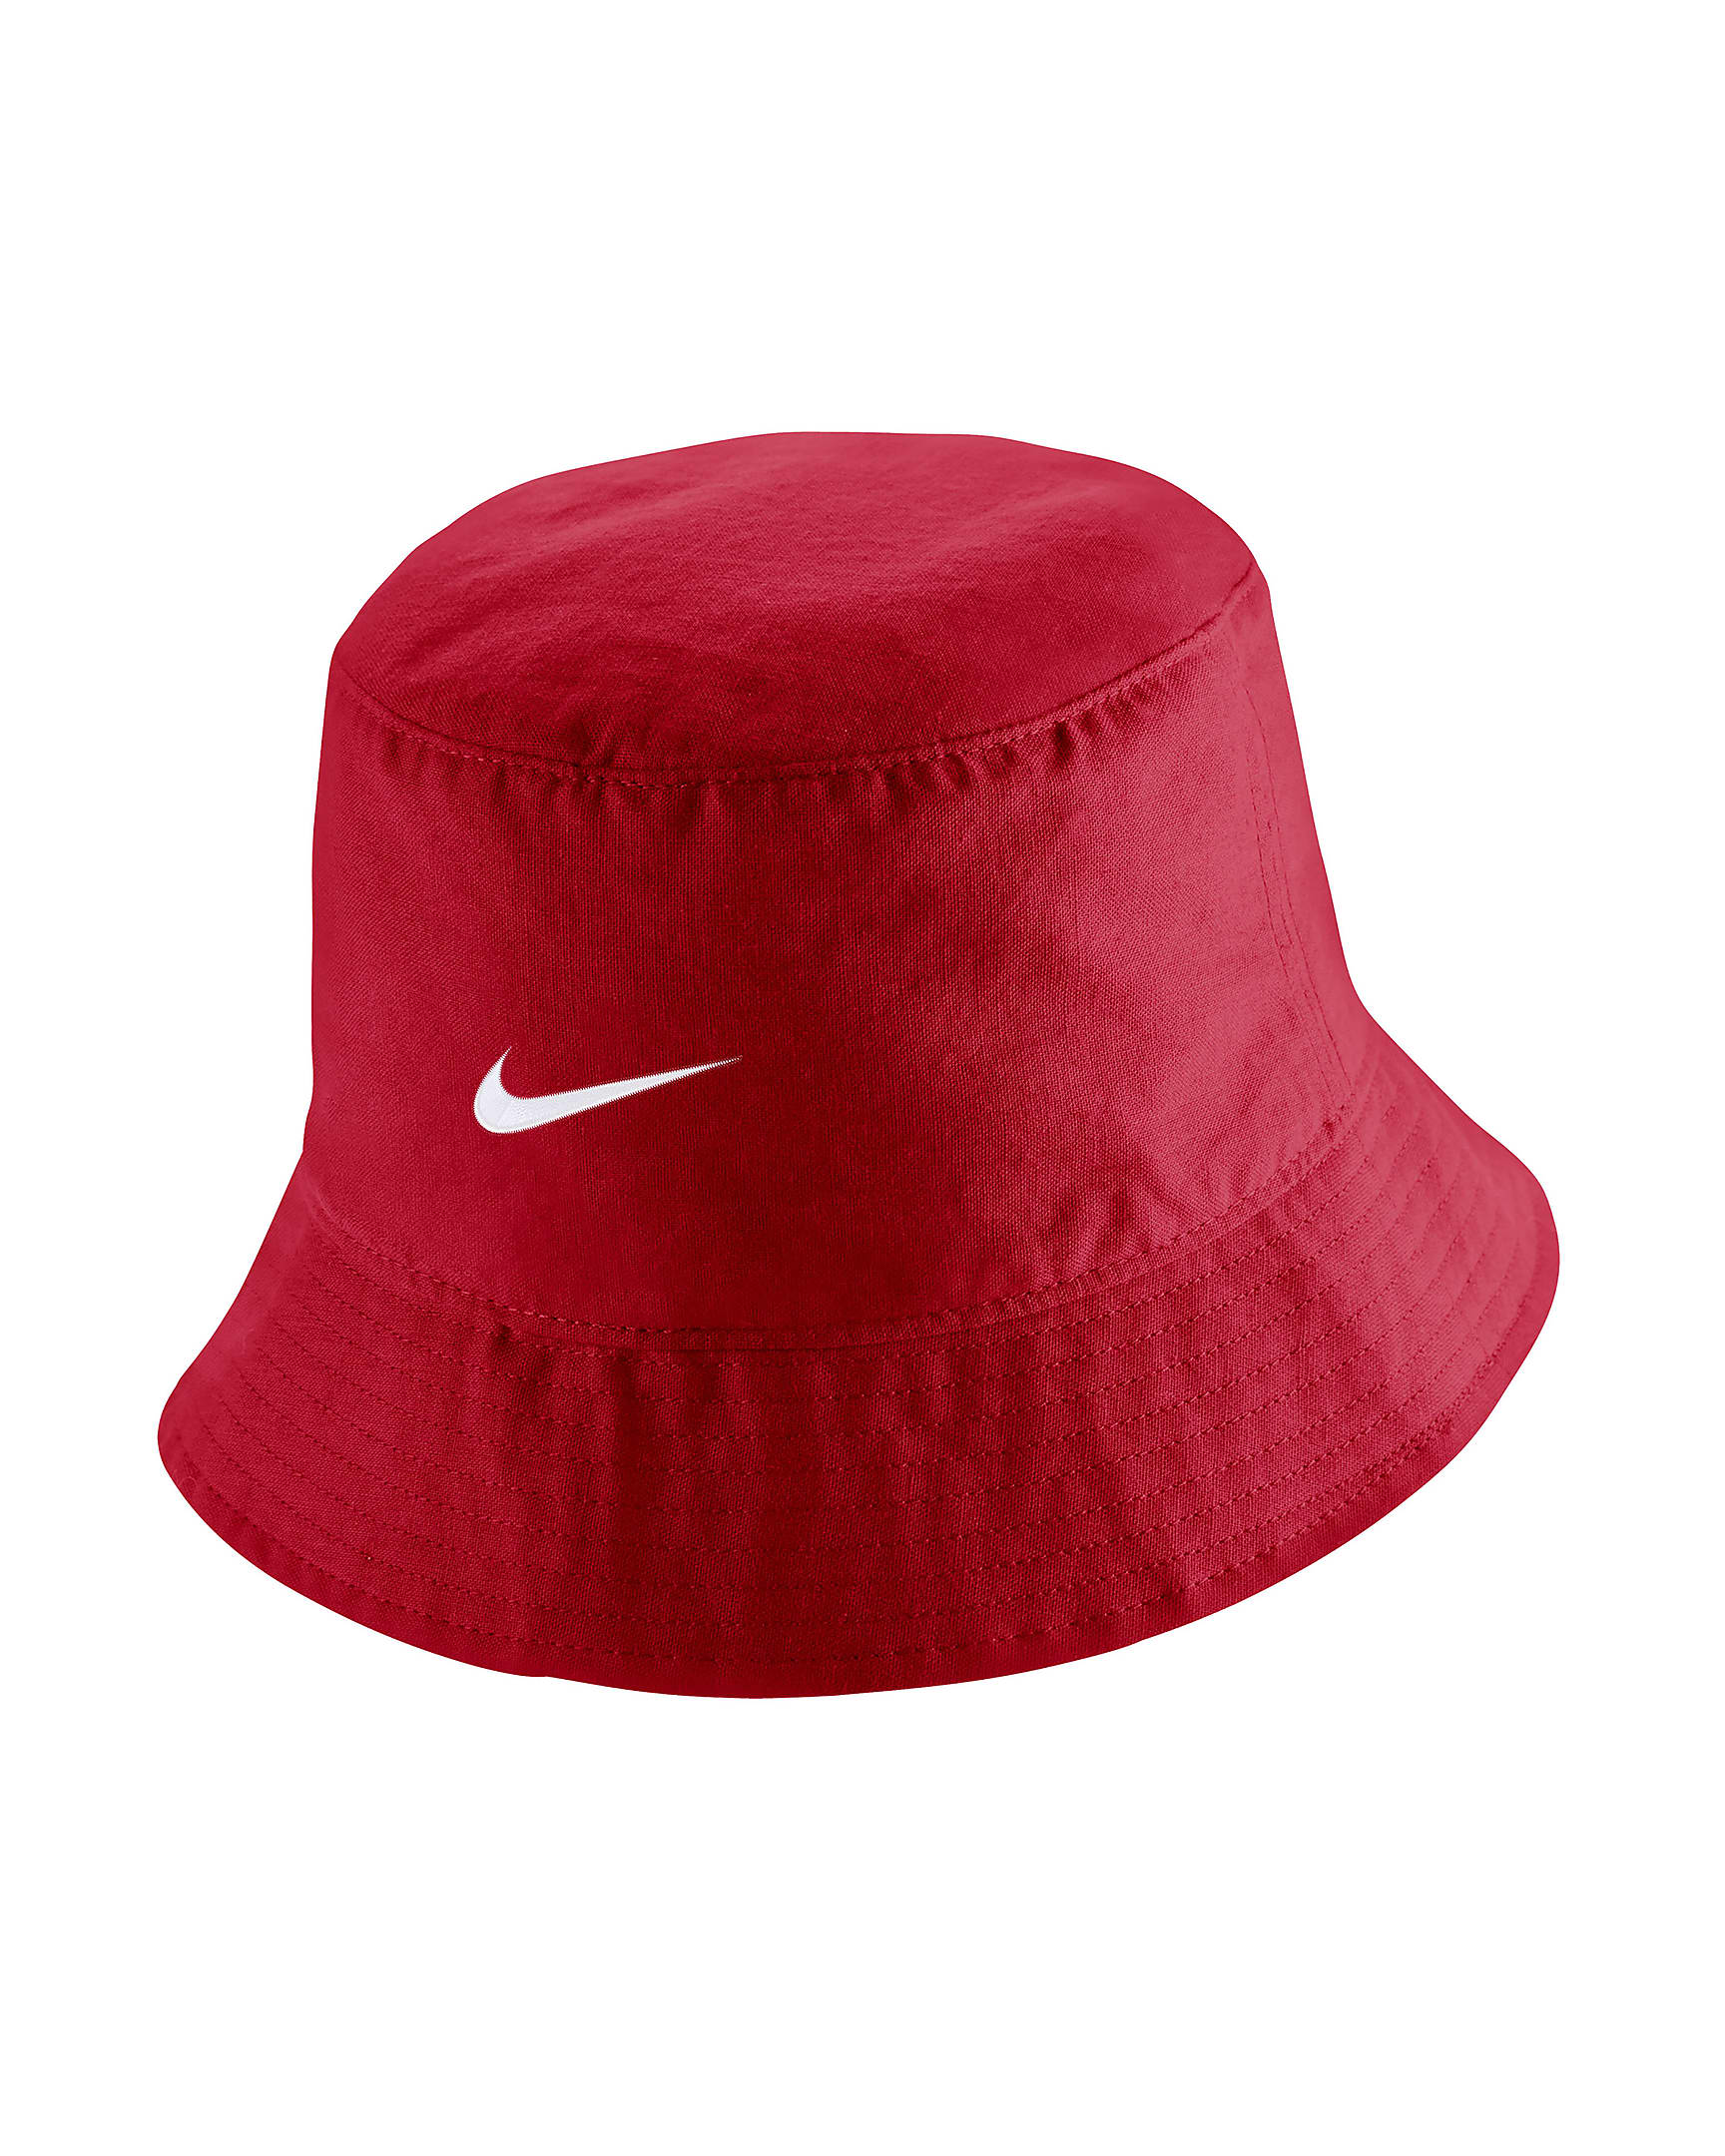 USMNT Men's Bucket Hat. Nike.com